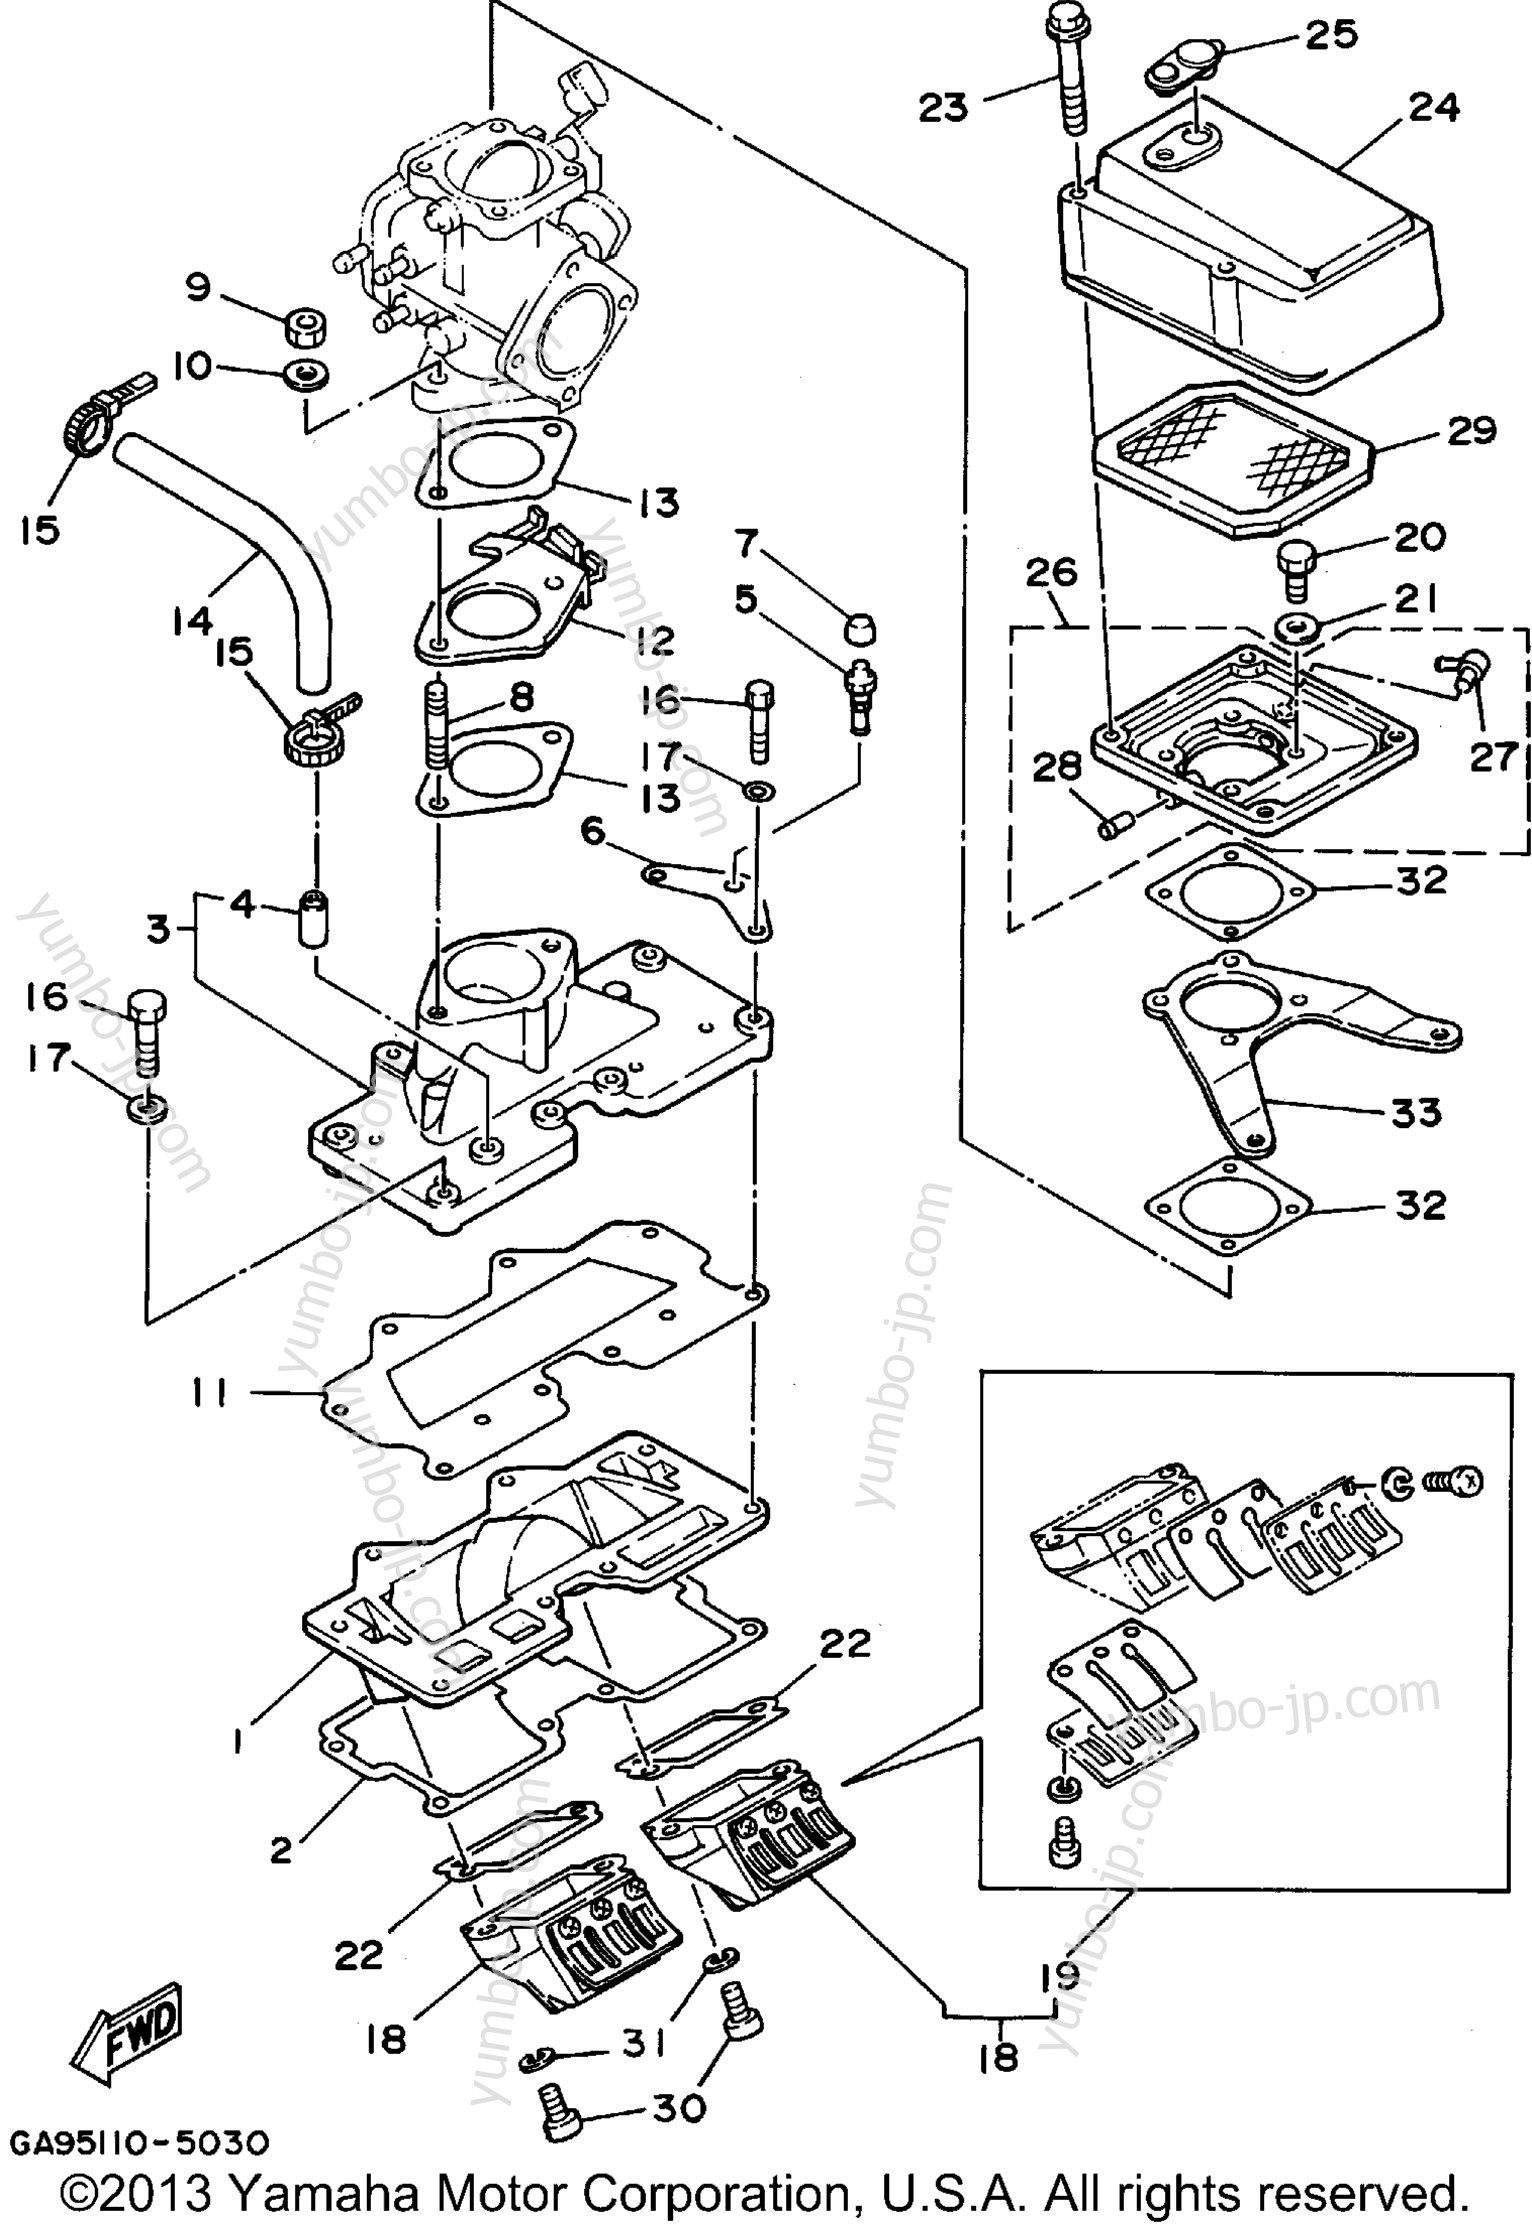 Intake для гидроциклов YAMAHA WAVE RUNNER III (WRA650T) 1995 г.